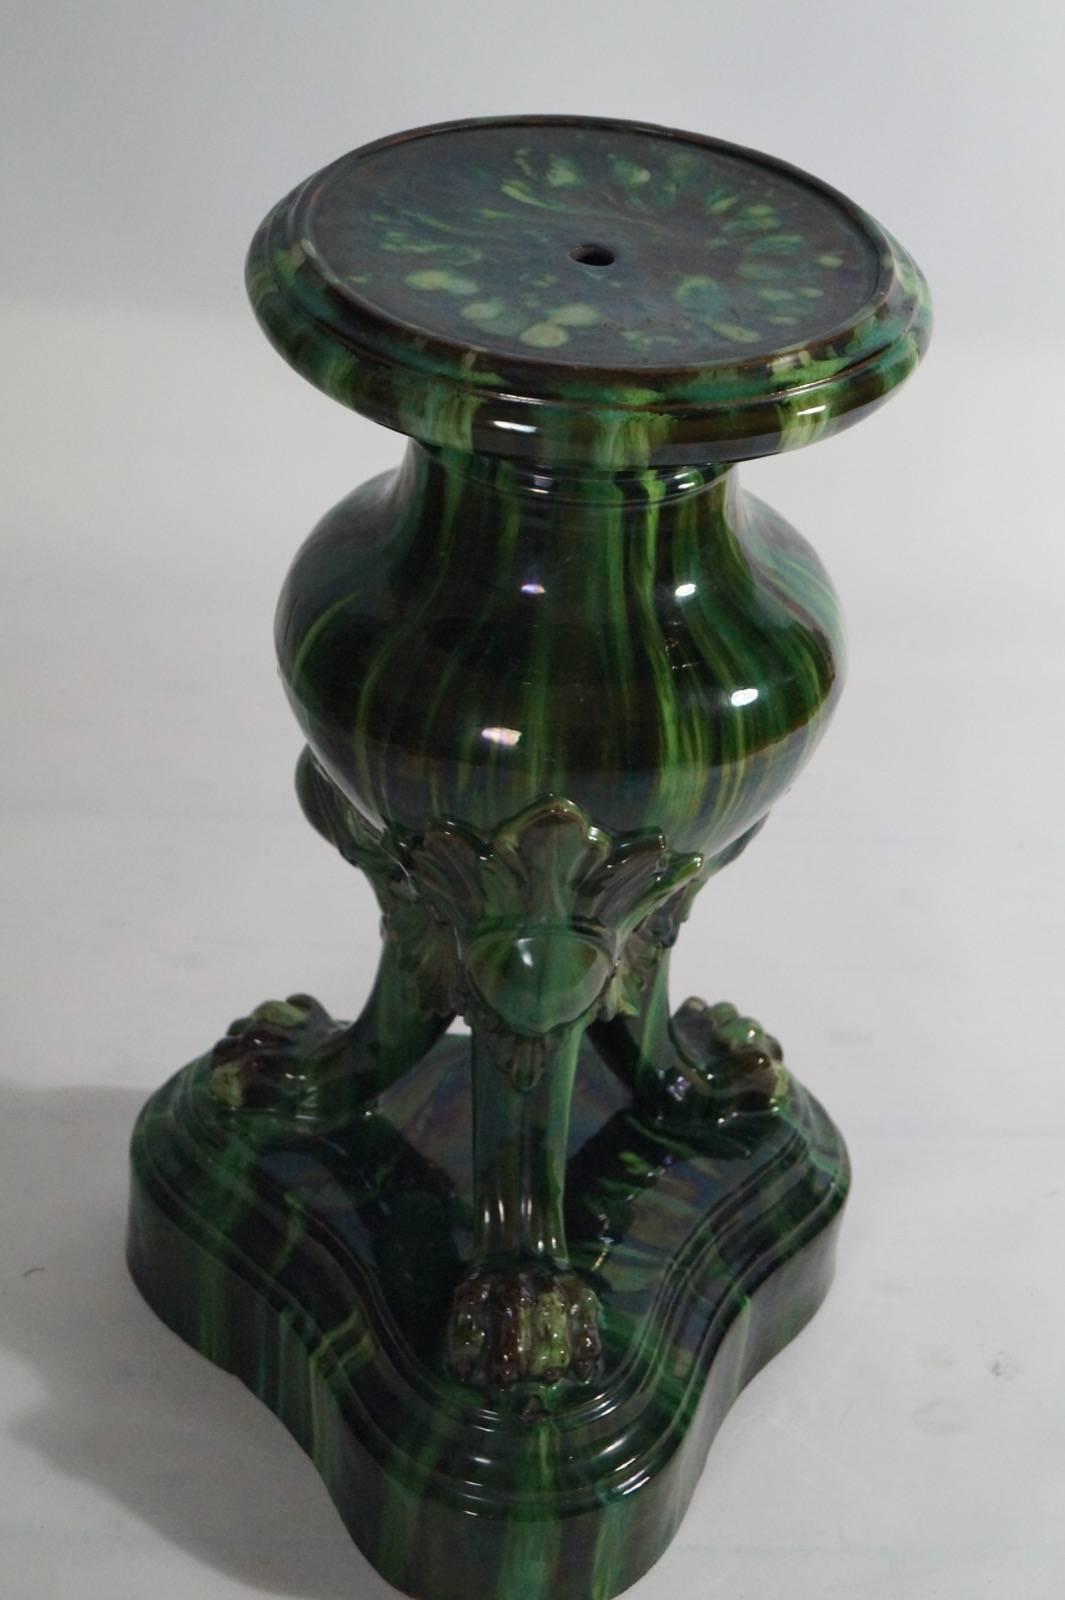 Beautiful green Art Nouveau pedestal.
Glazed earthenware.
Measures: Height 60cm, diameter base 35cm, diameter top 29cm.
Vase included.

Two Items:
One pedestal.
One vase.